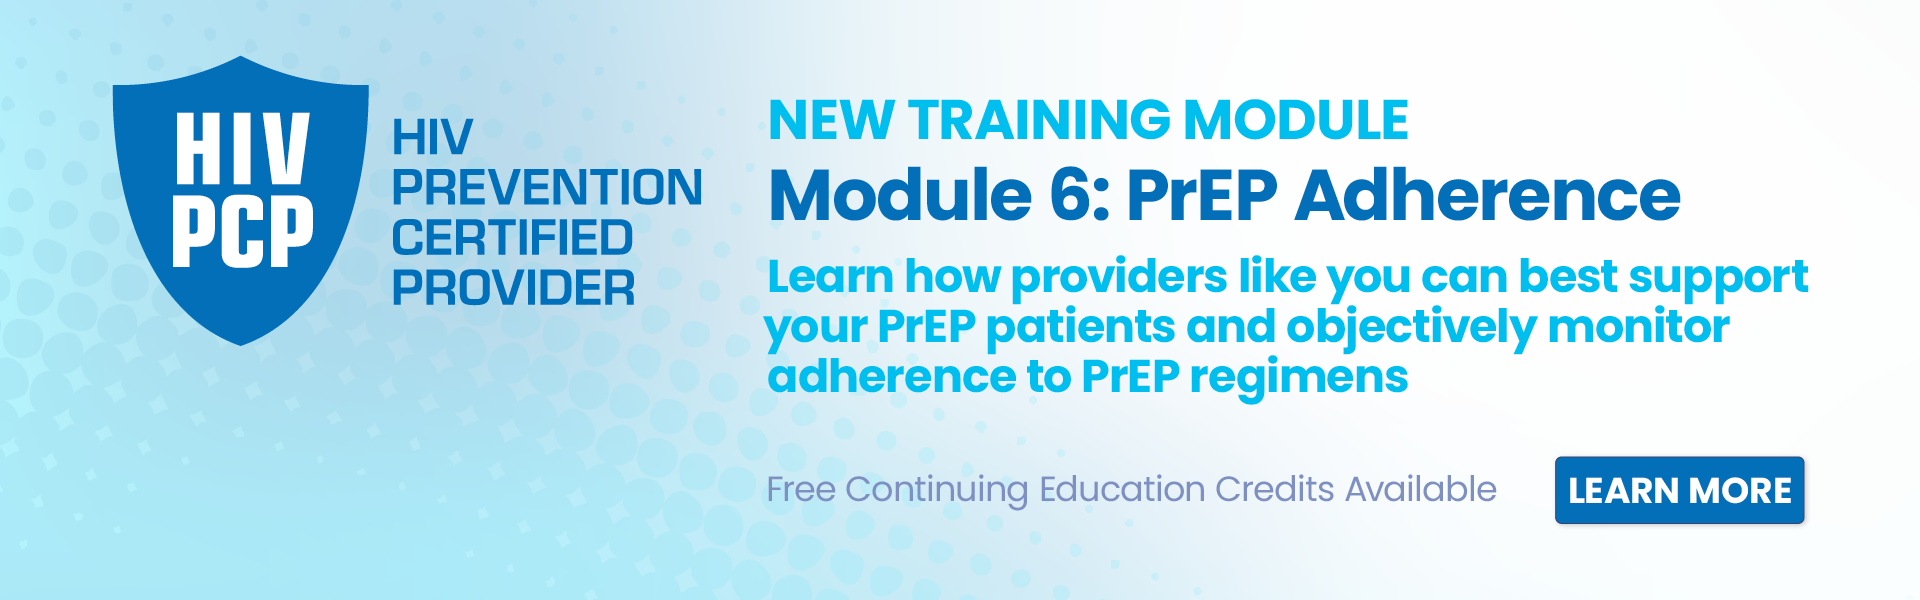 HIV PCP New Module: PrEP Adherence